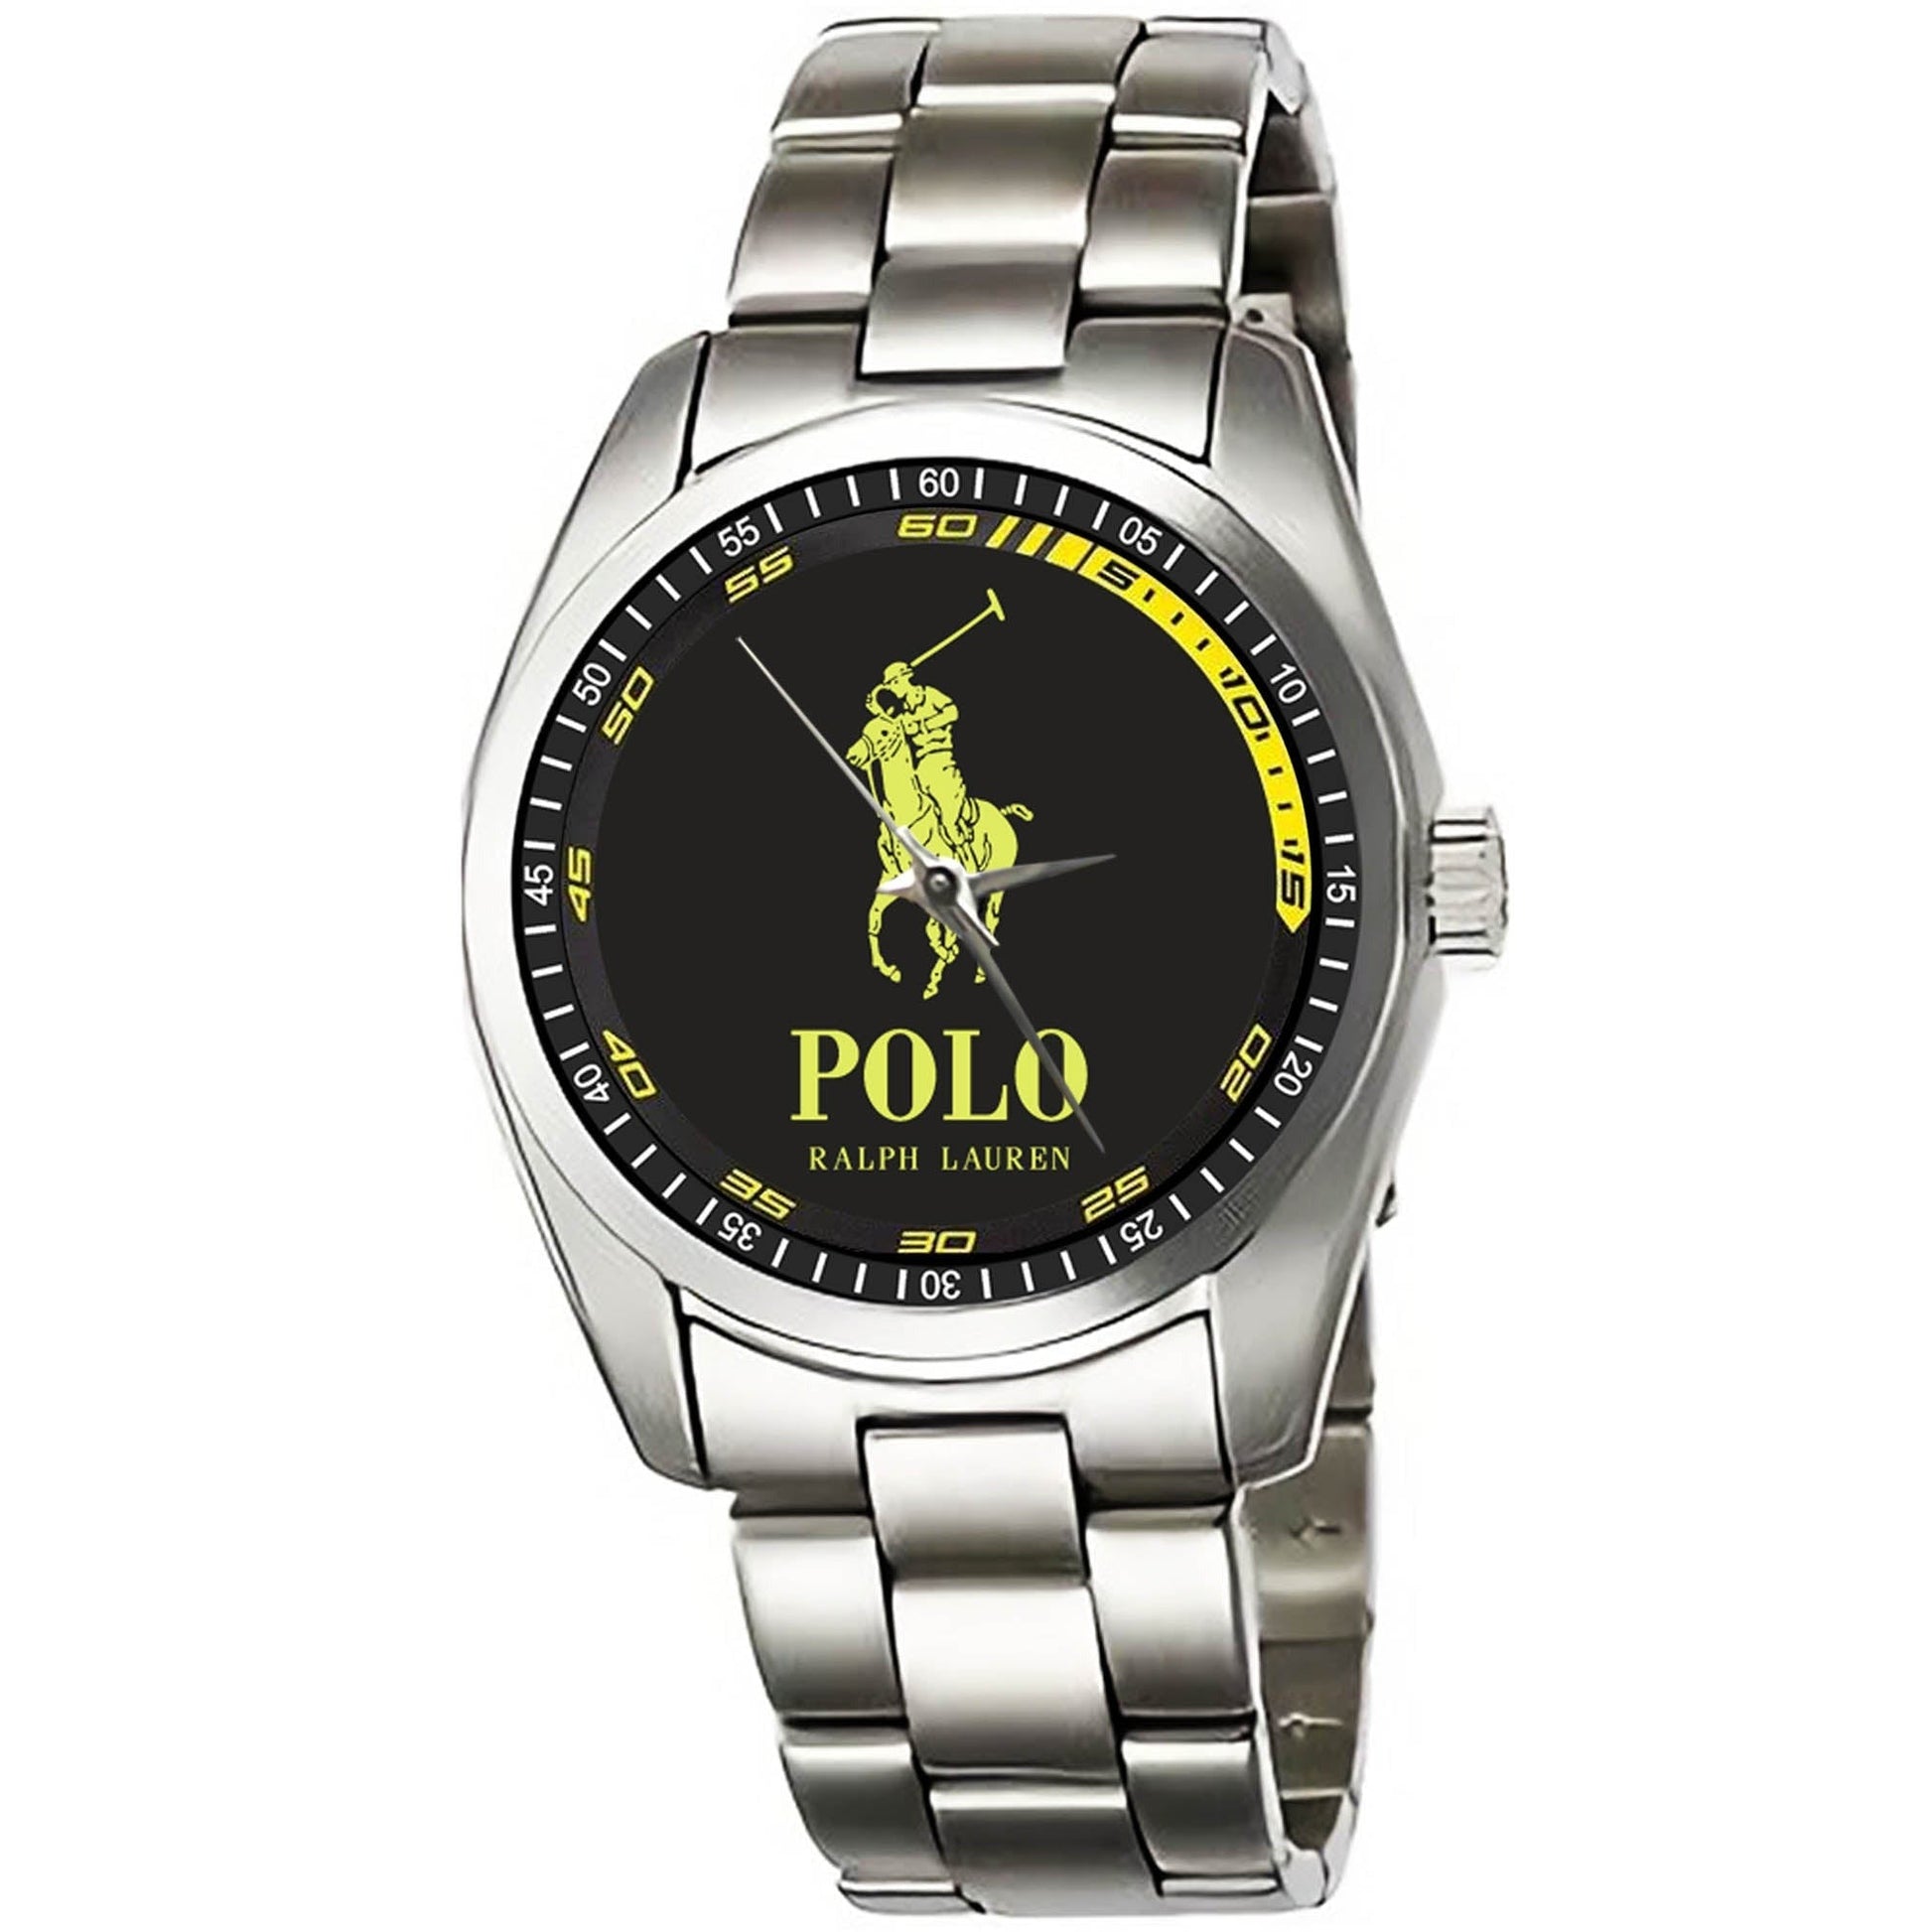 Polo Ralph Lauren Watches KP649